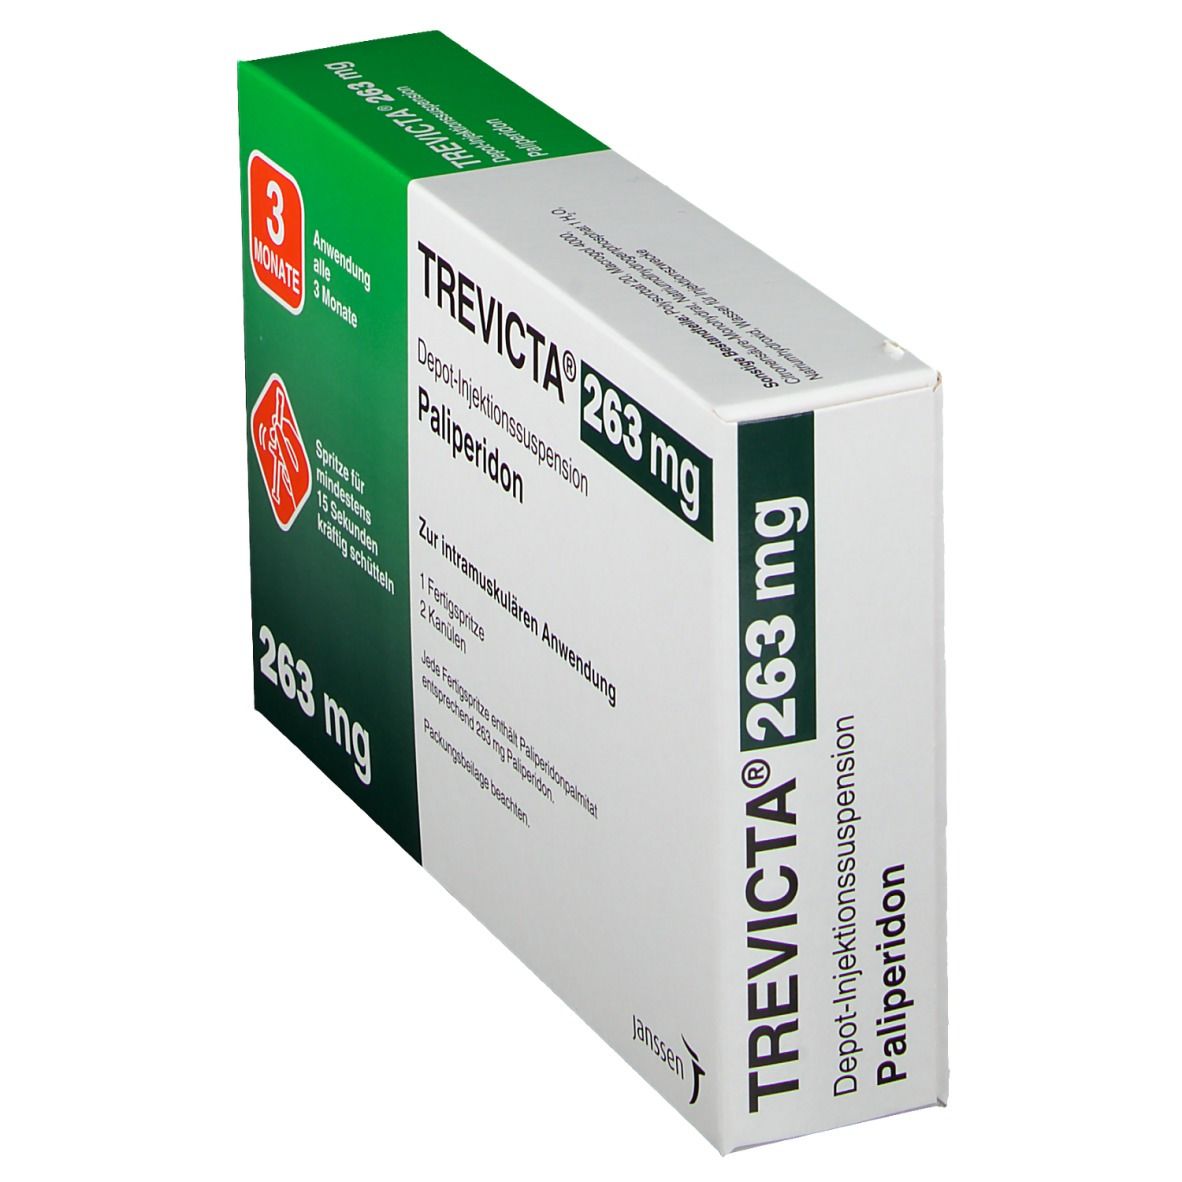 TREVICTA® 263 mg